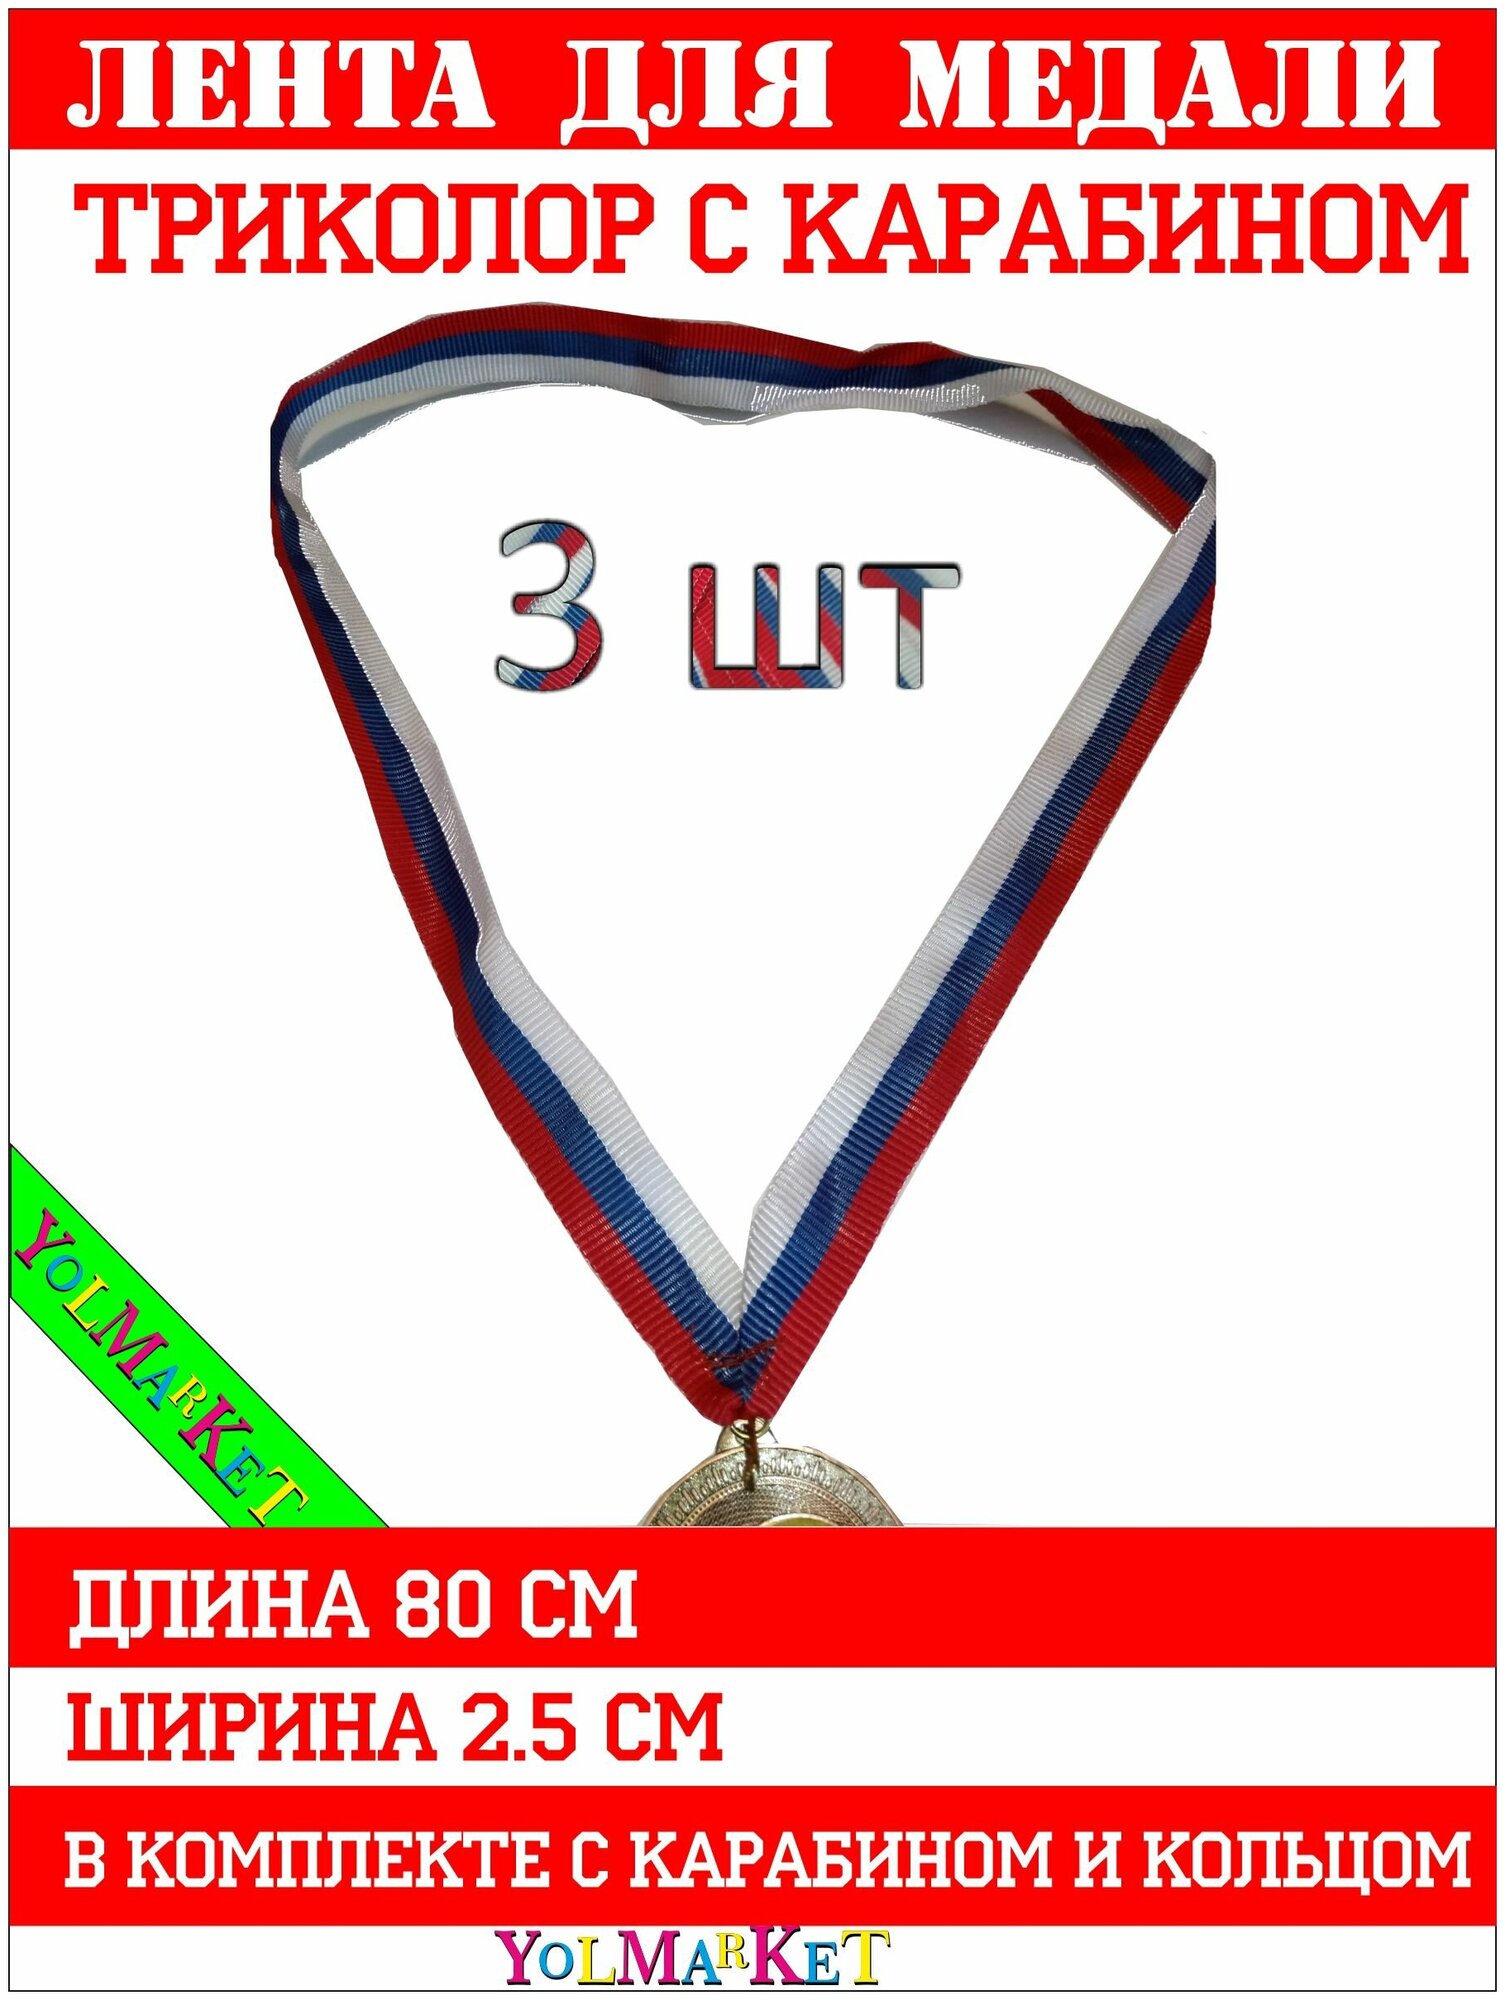 Лента для медали триколор с карабином - 3 шт.